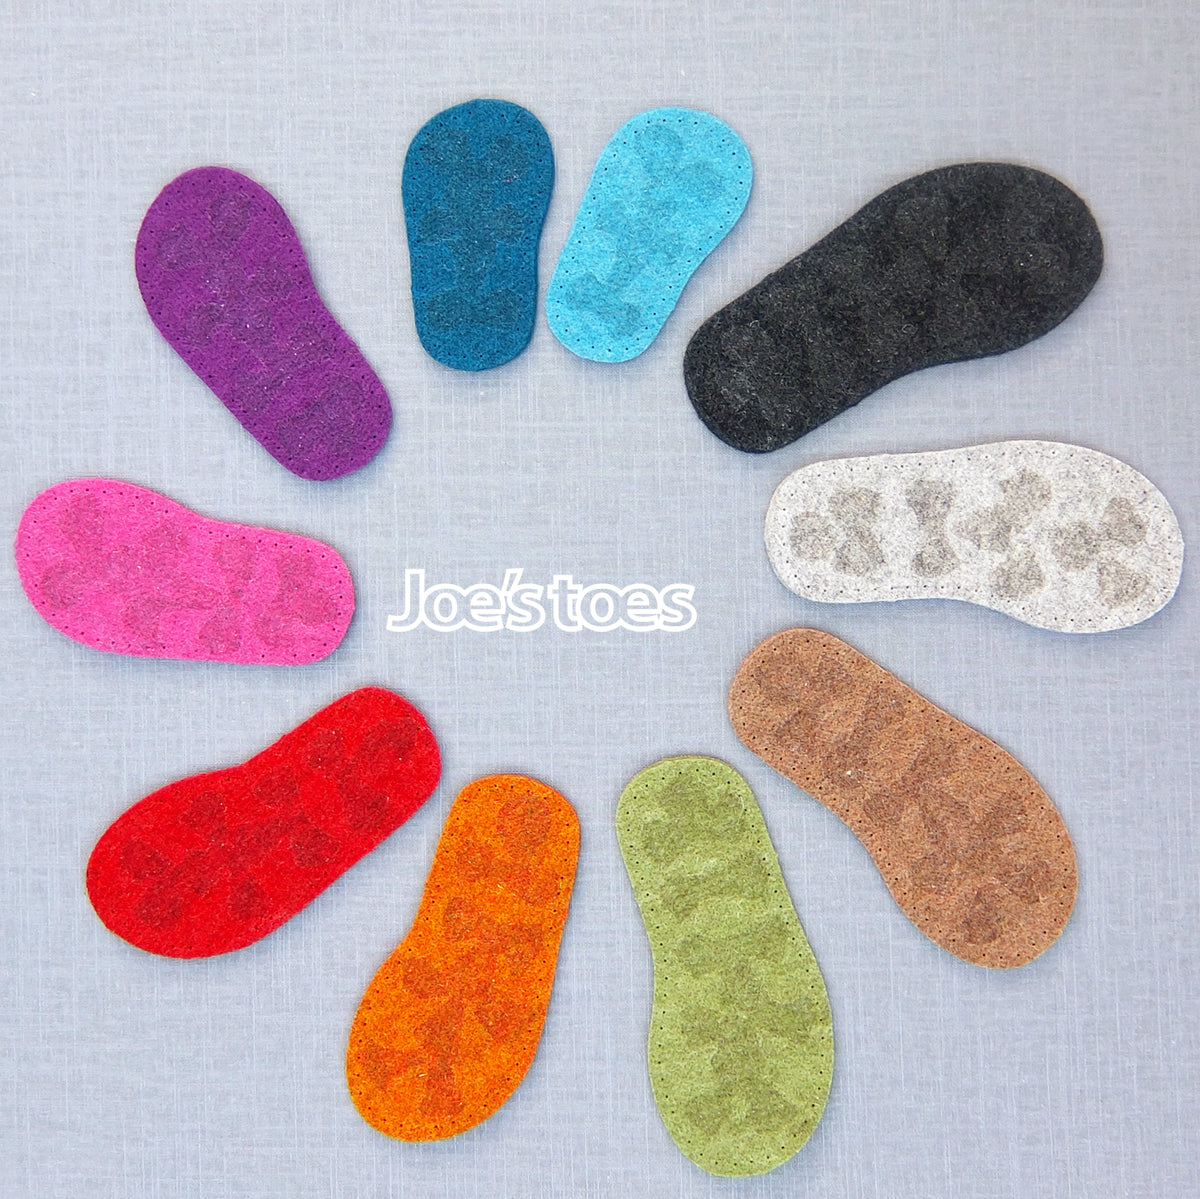 joe's toes slipper soles